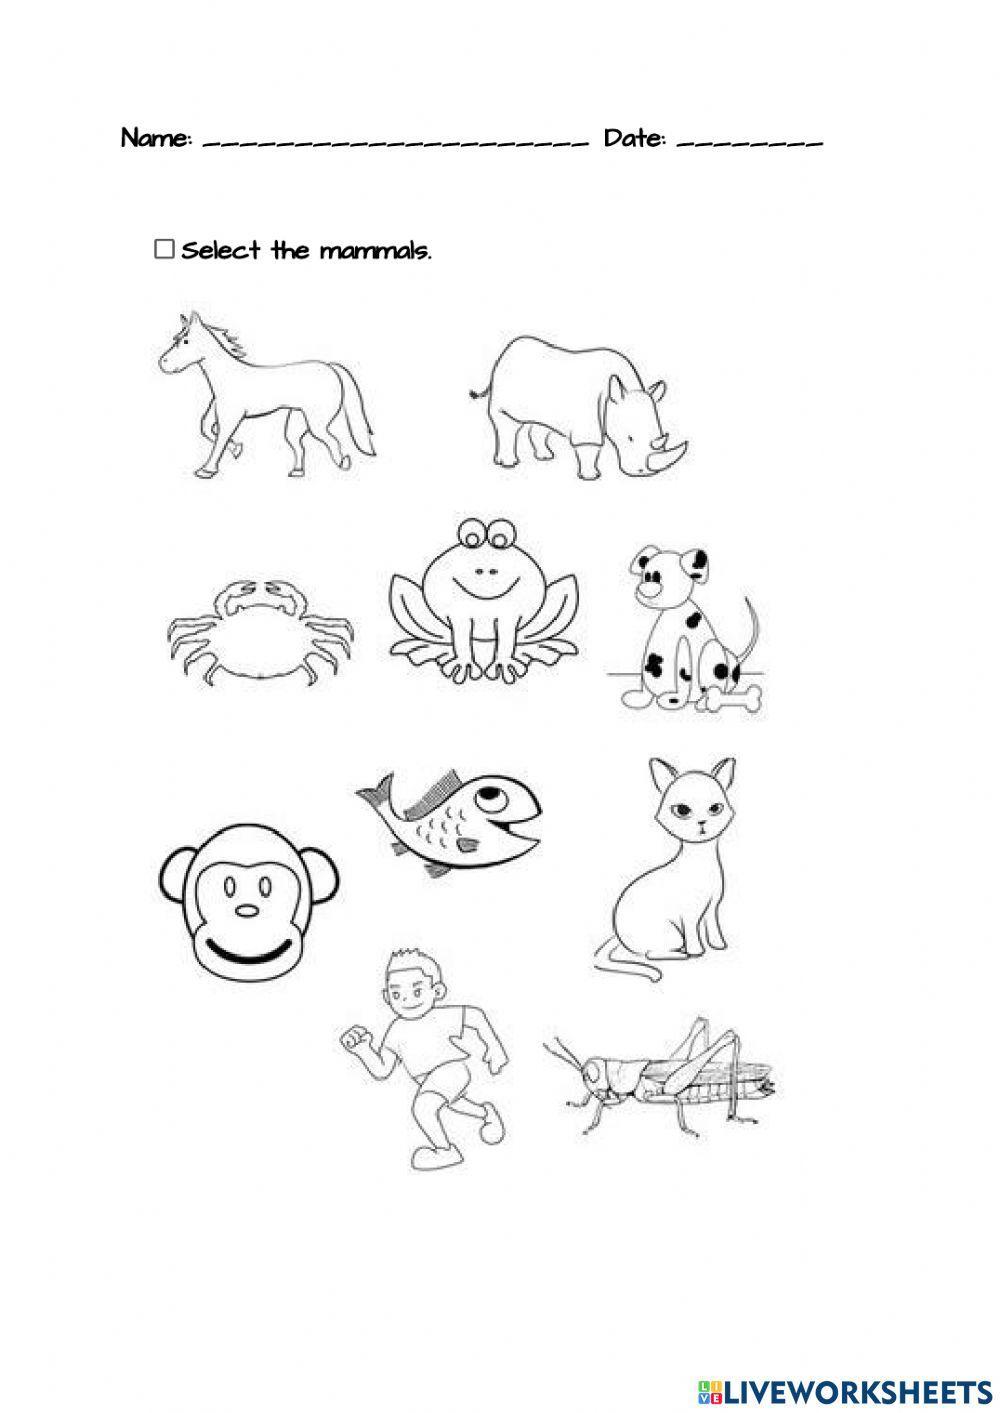 Select mammals